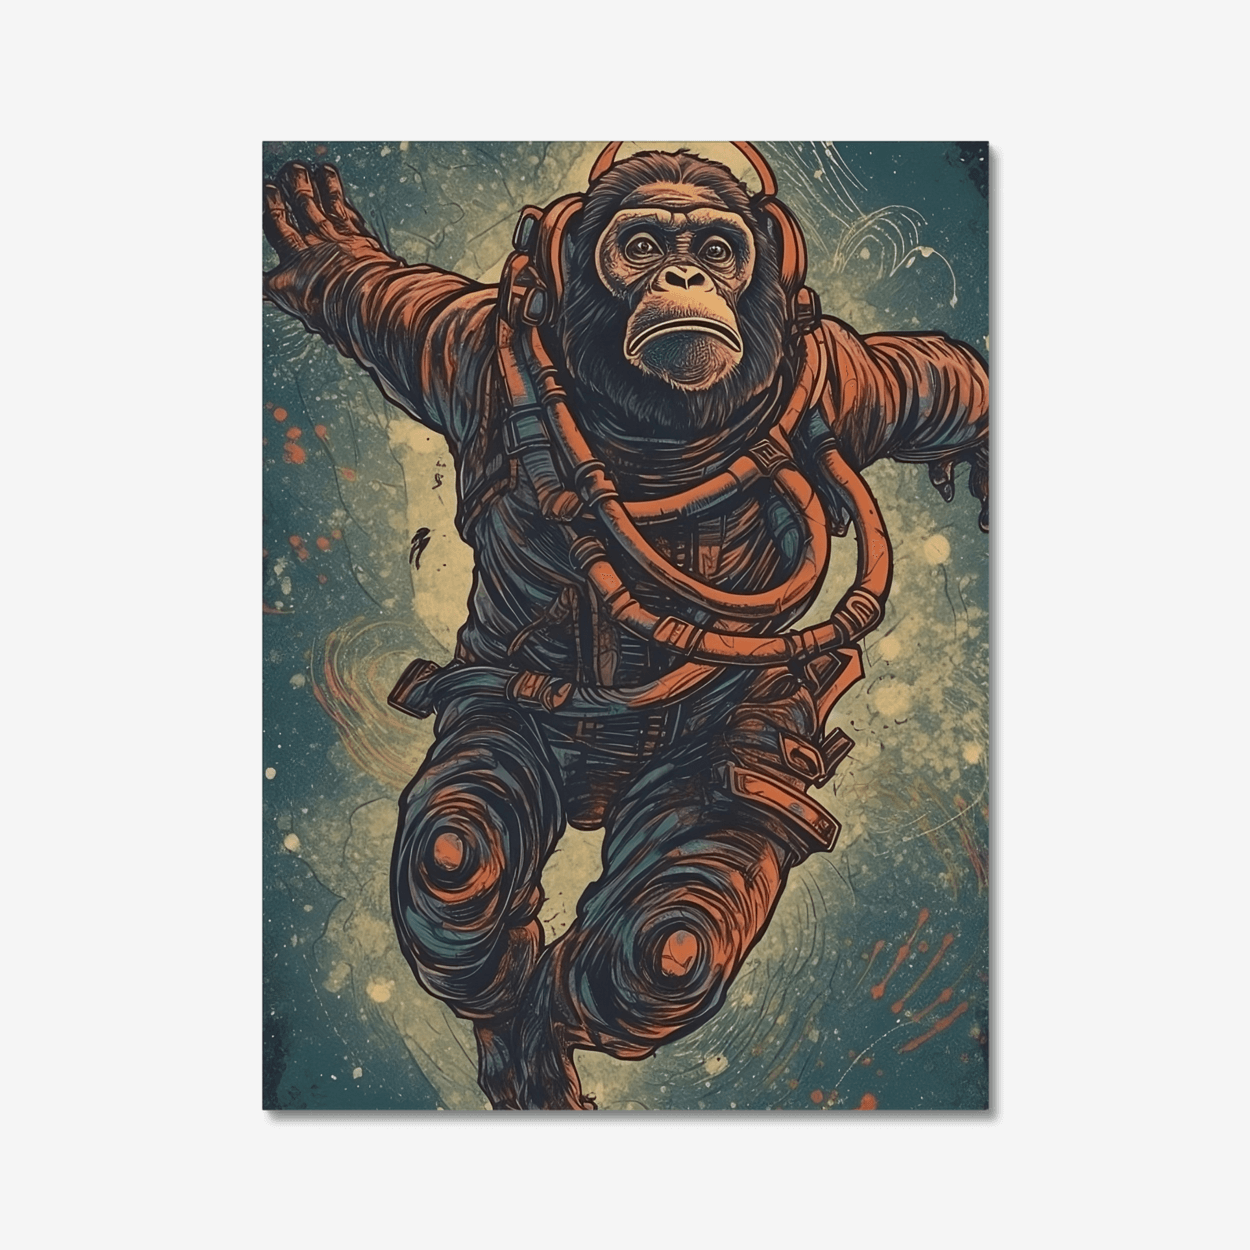 Space monkey